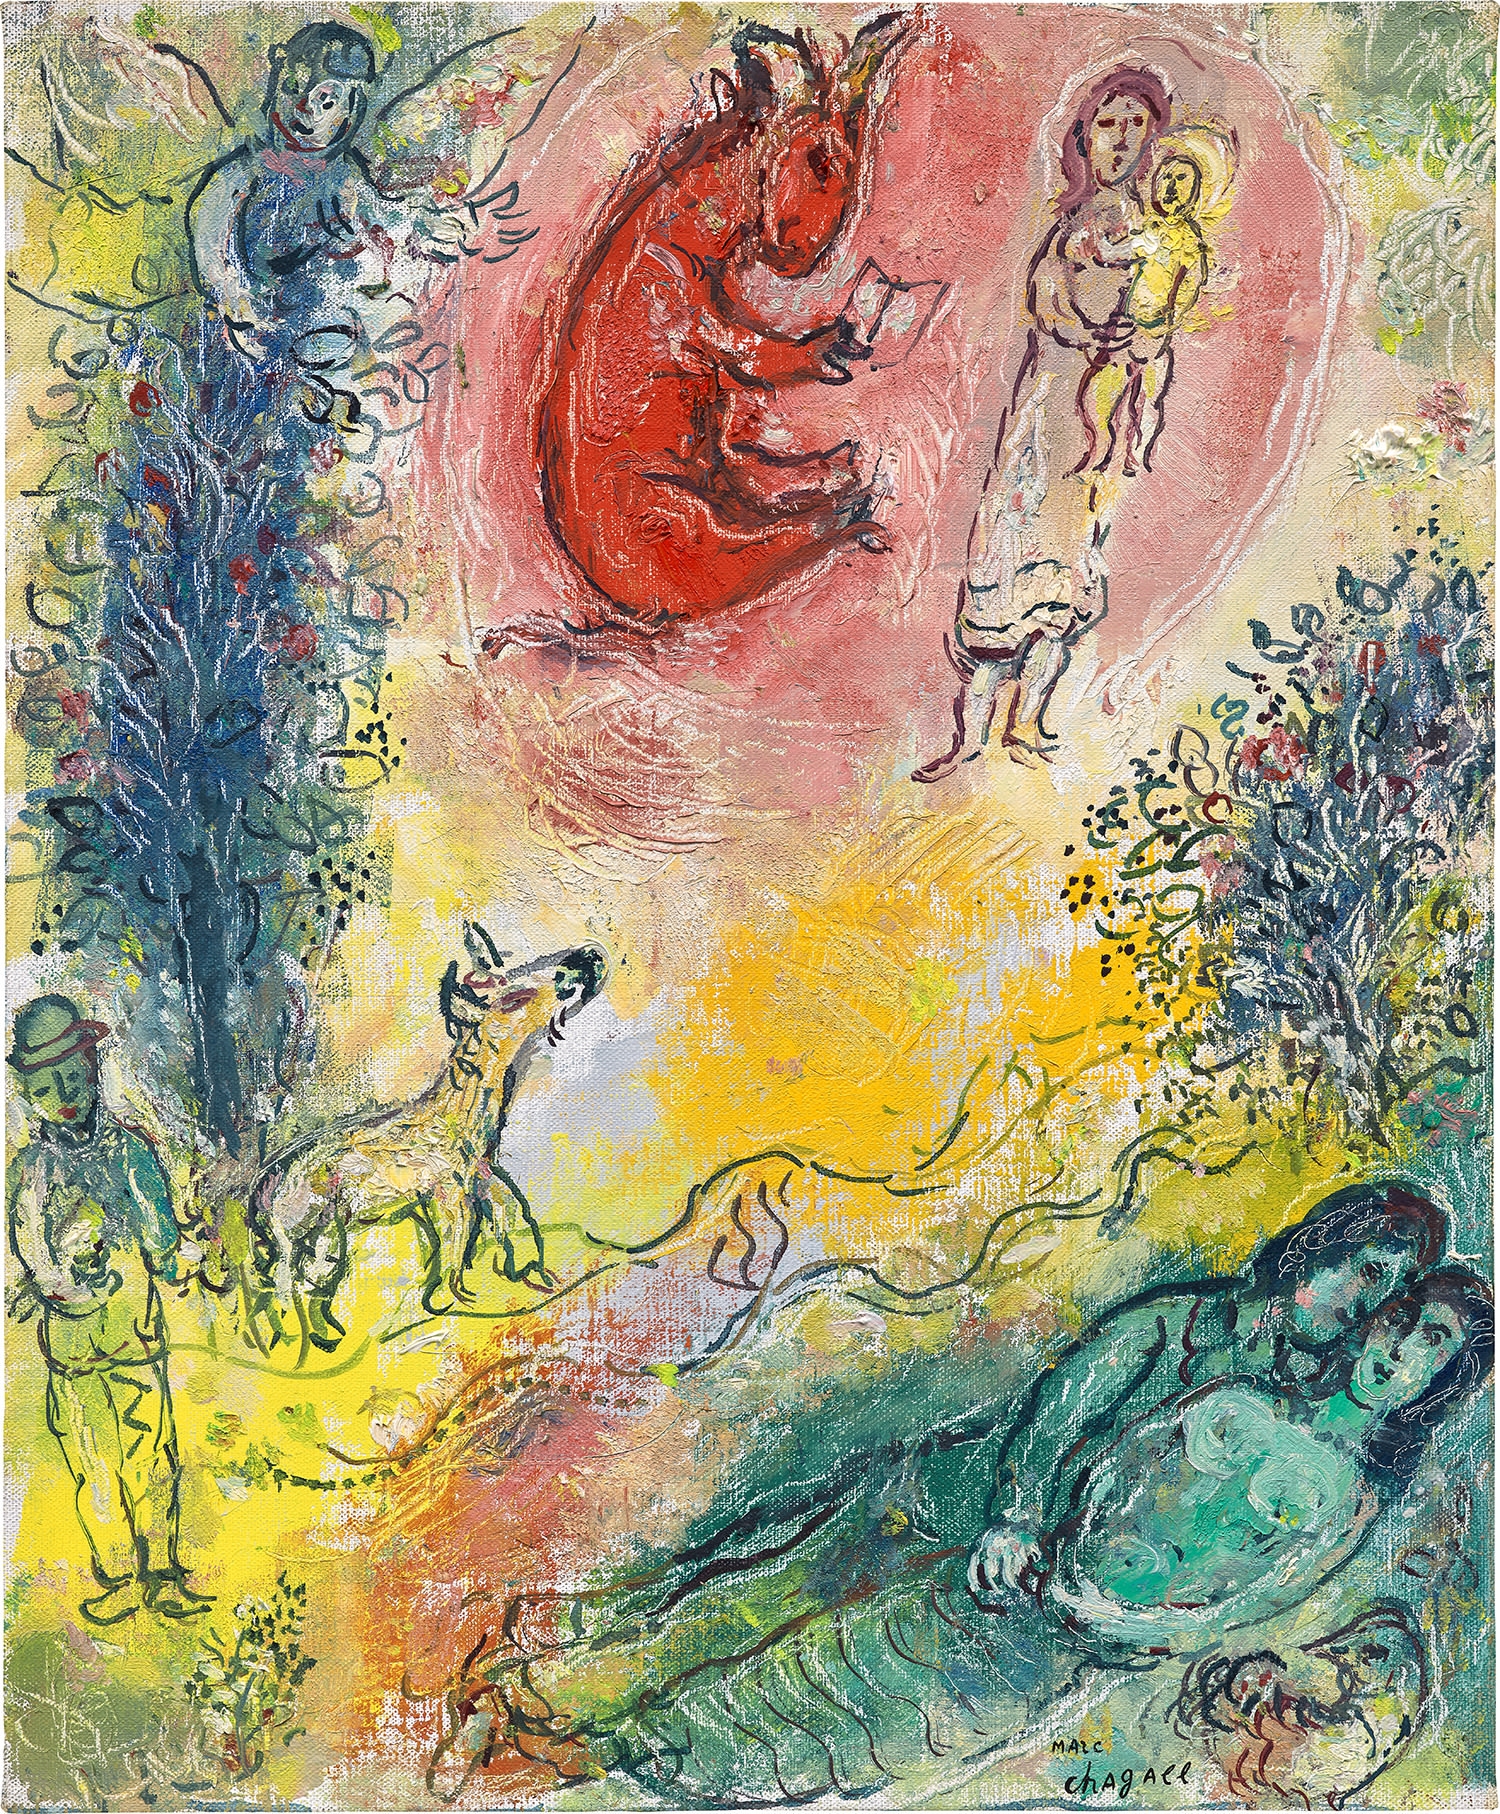 Bouc rouge lisant au-dessus des amoureux au repos by Marc Chagall, Painted in 1971